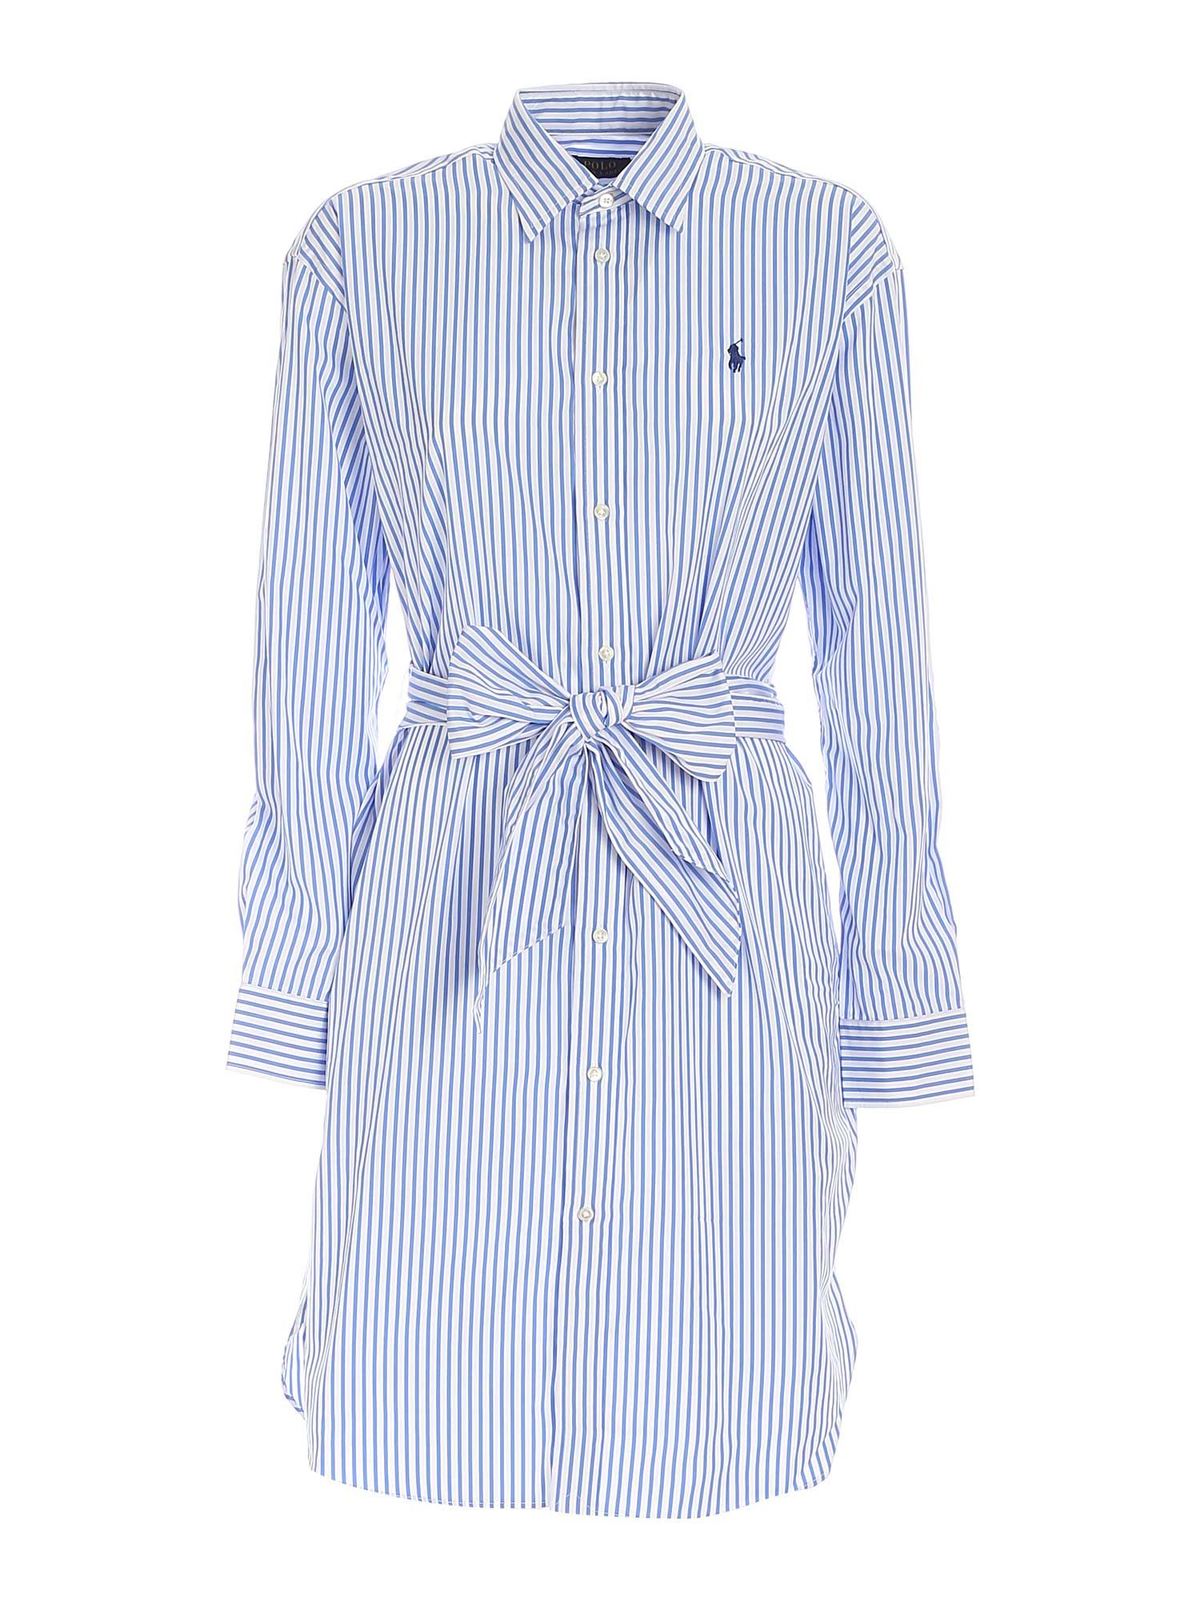 Short dresses Polo Ralph Lauren - Striped dress in light blue and white -  211781122001